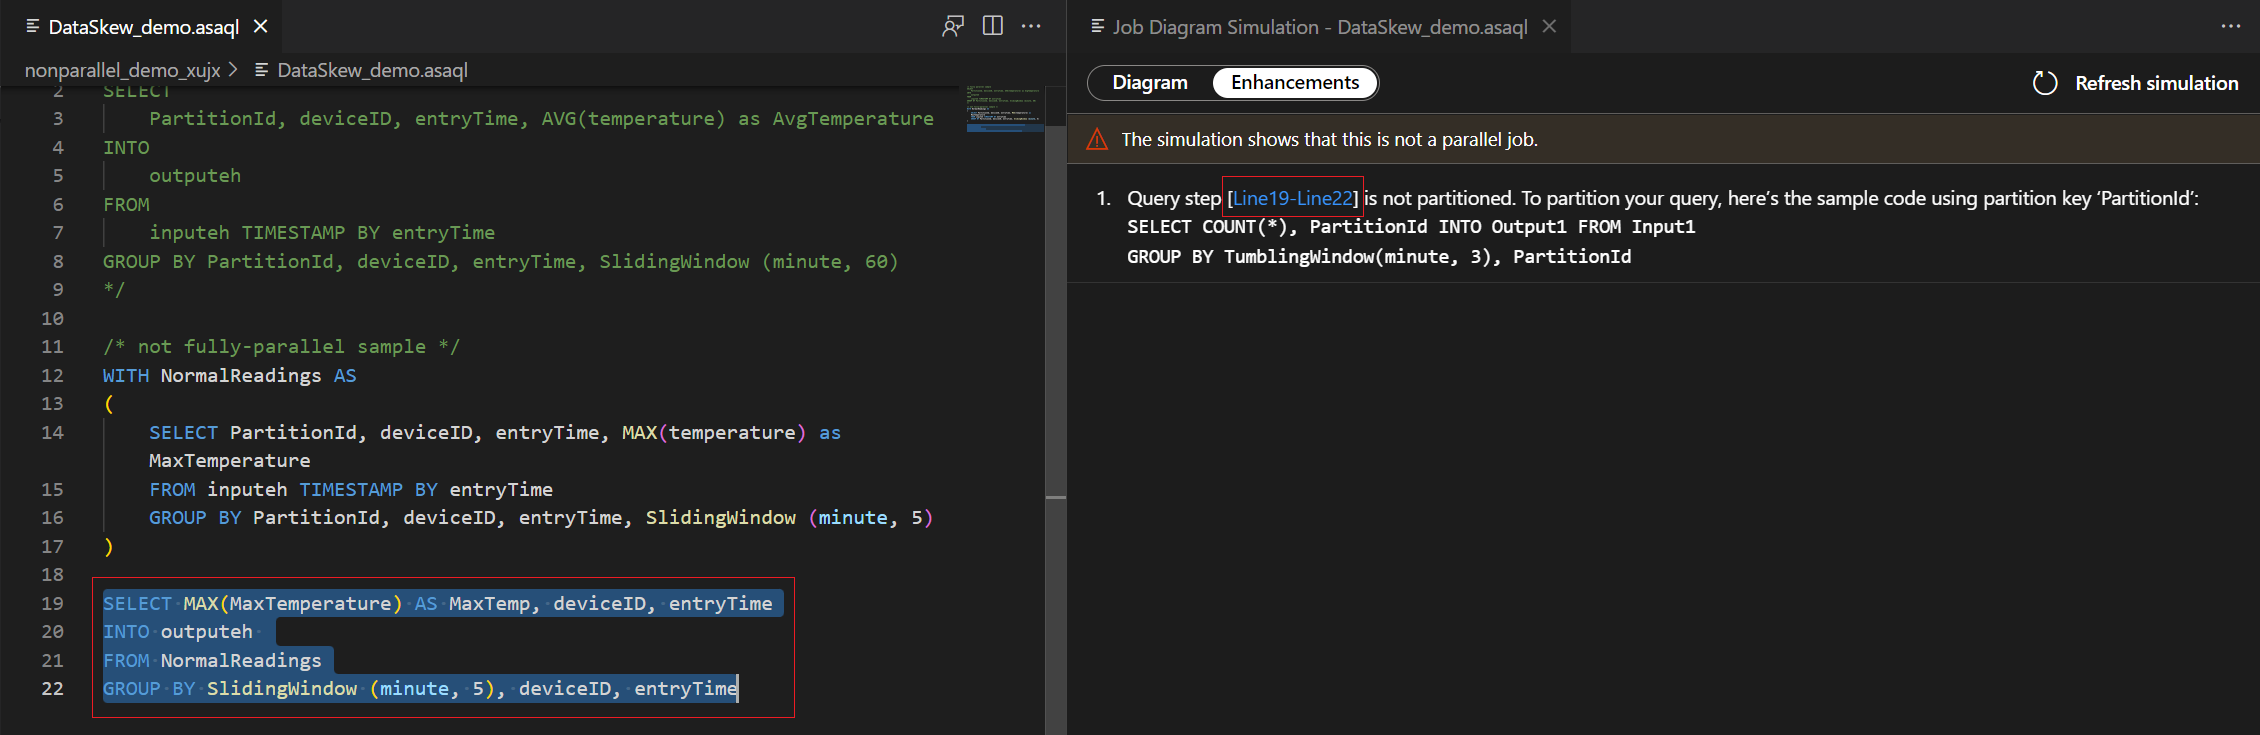 Screenshot of the VS Code using job diagram simulator and highlighting the query step.